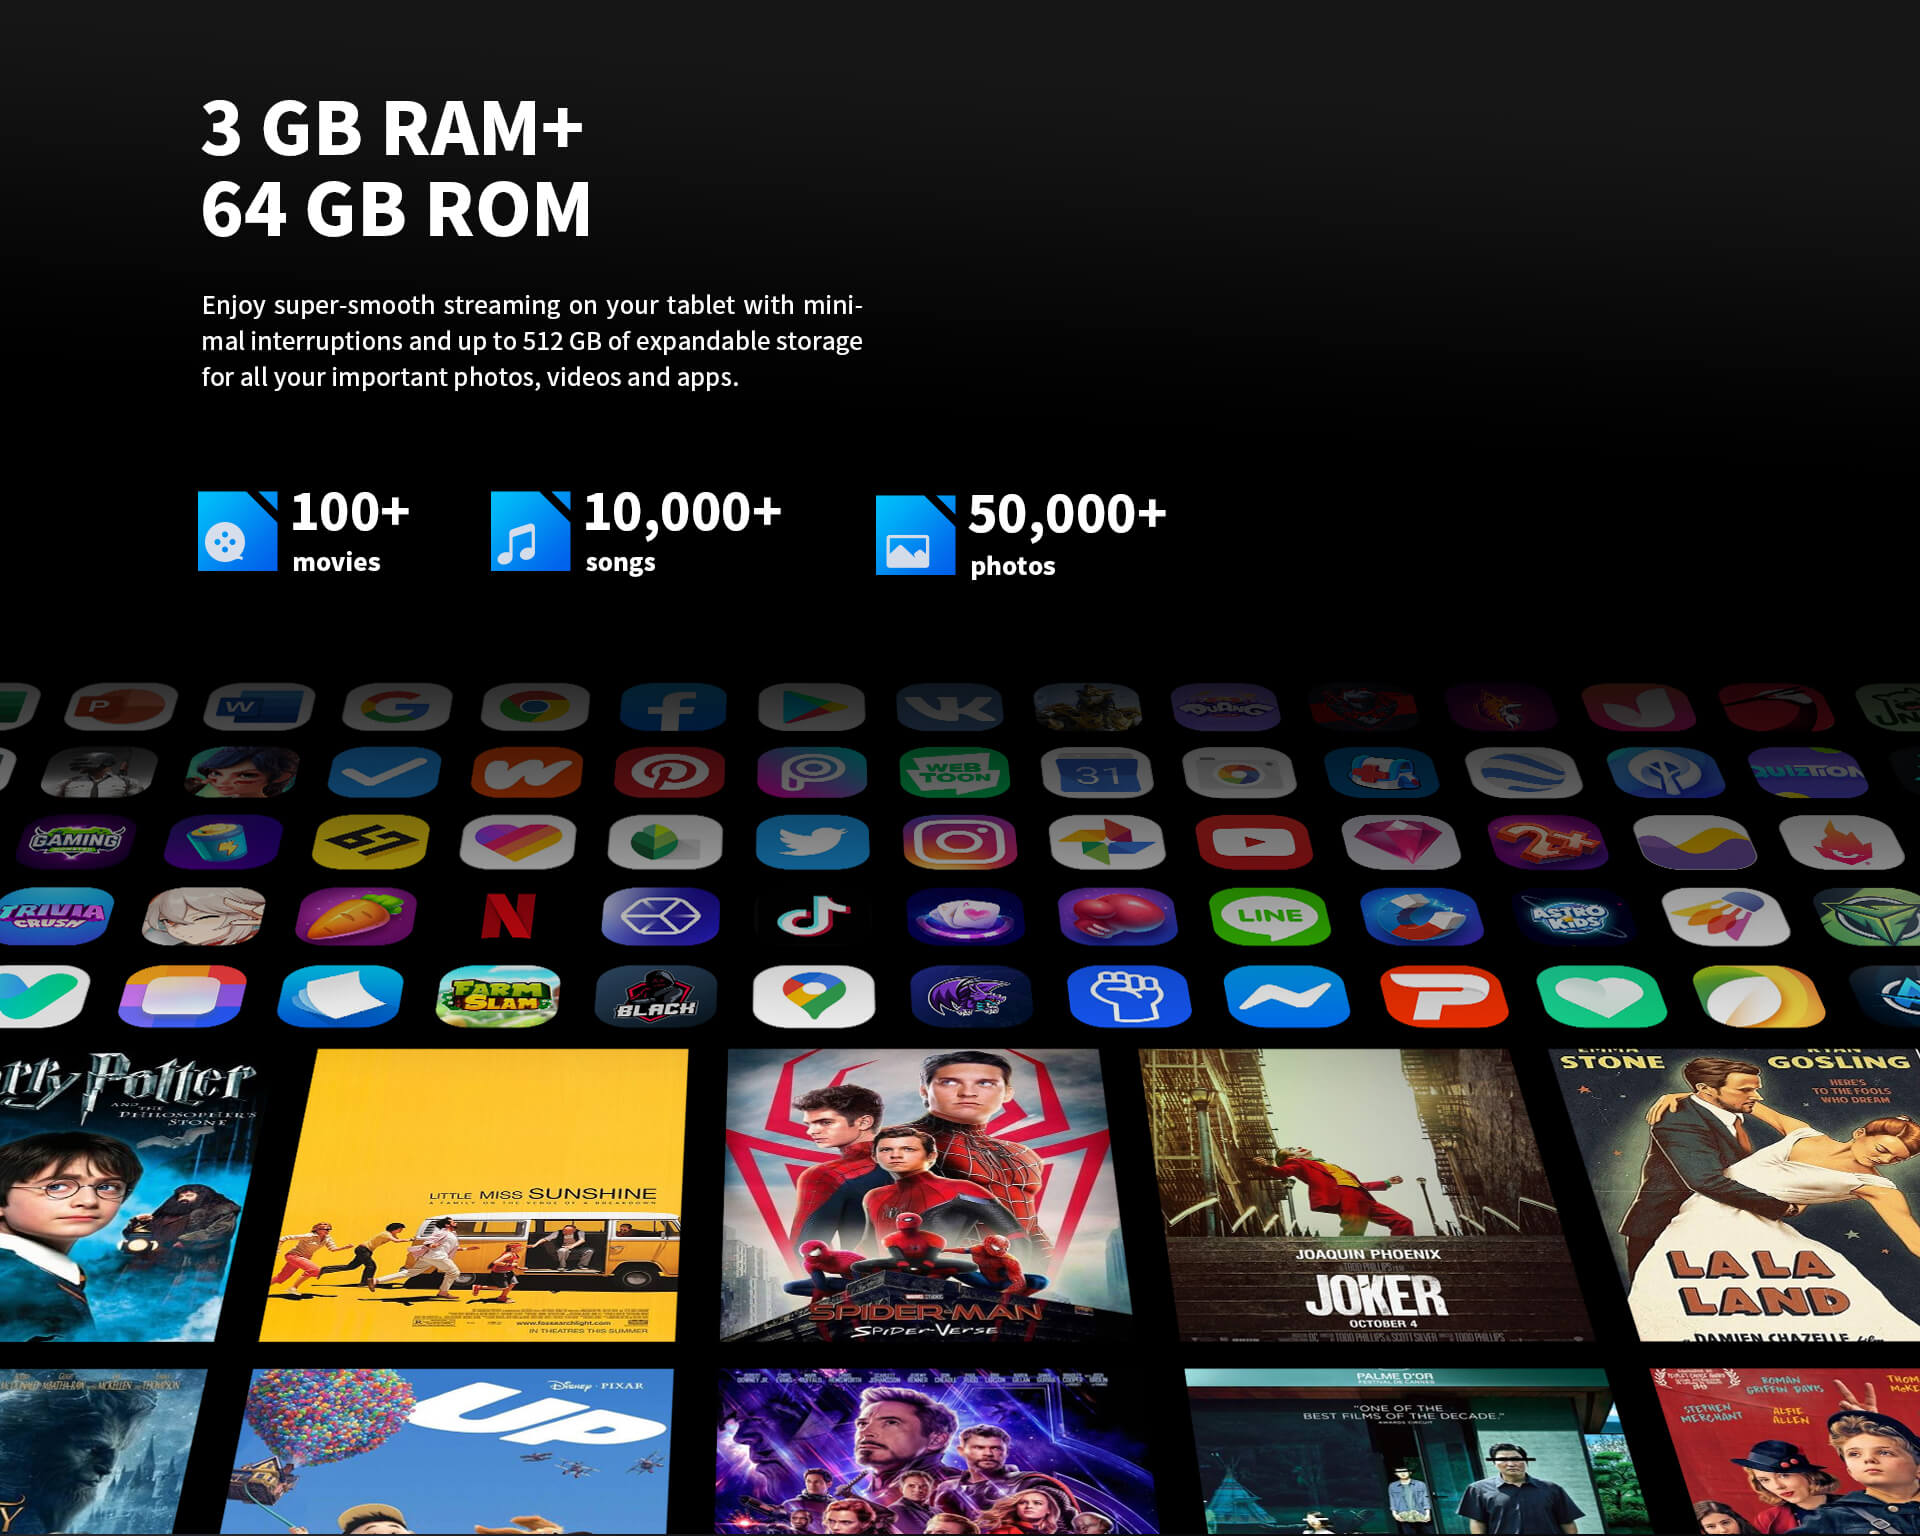 3GB RAM + 64GB ROM